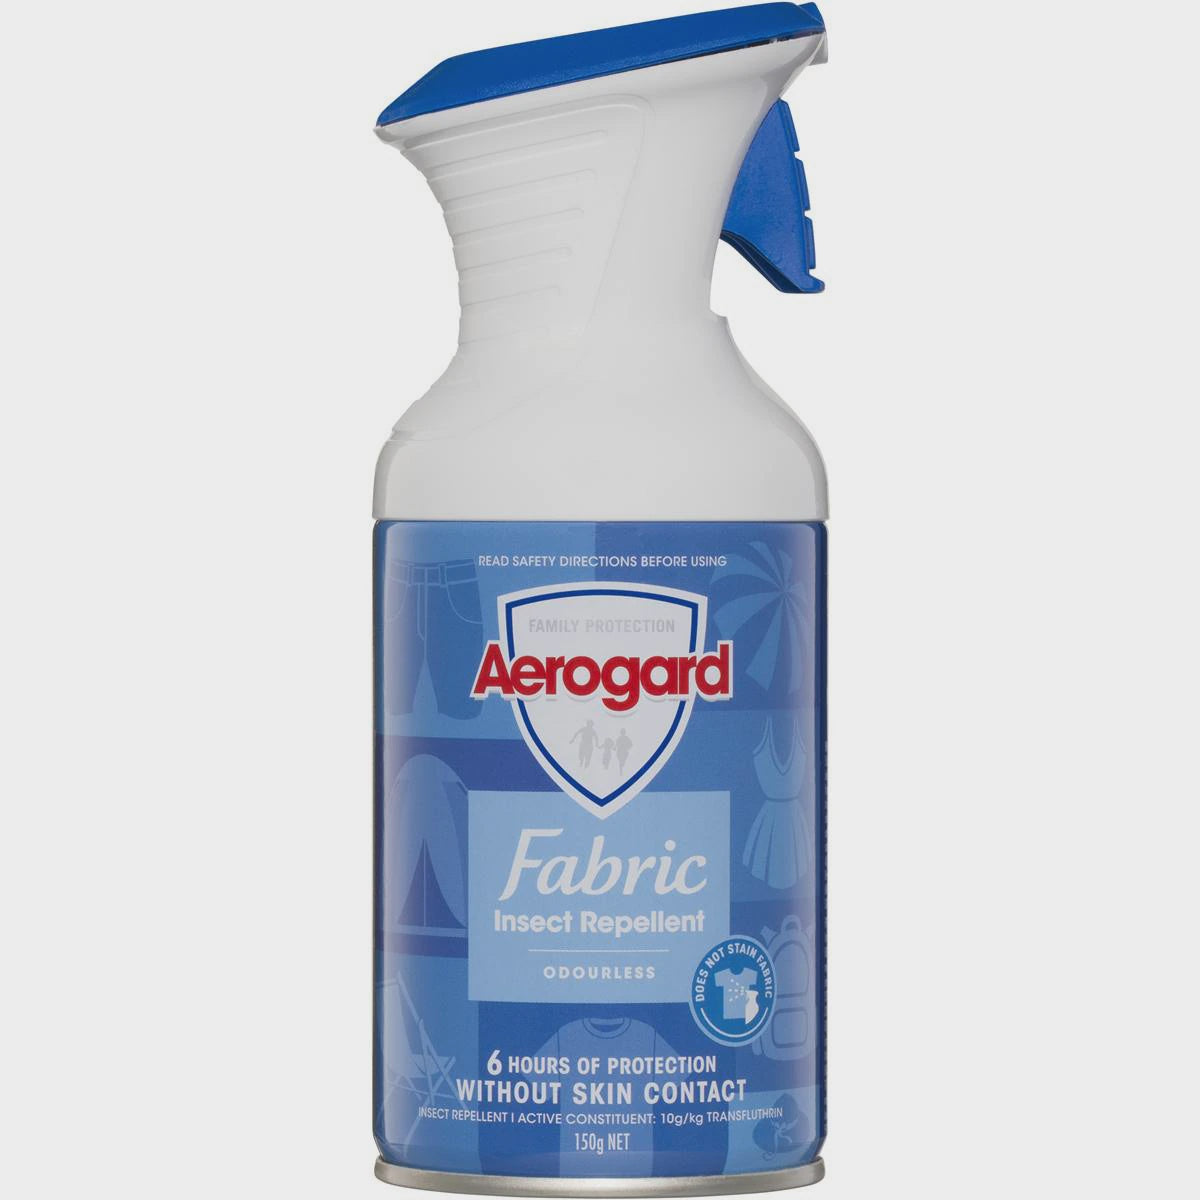 Aerogard Fabric Insect Repellent Spray Odourless 150g